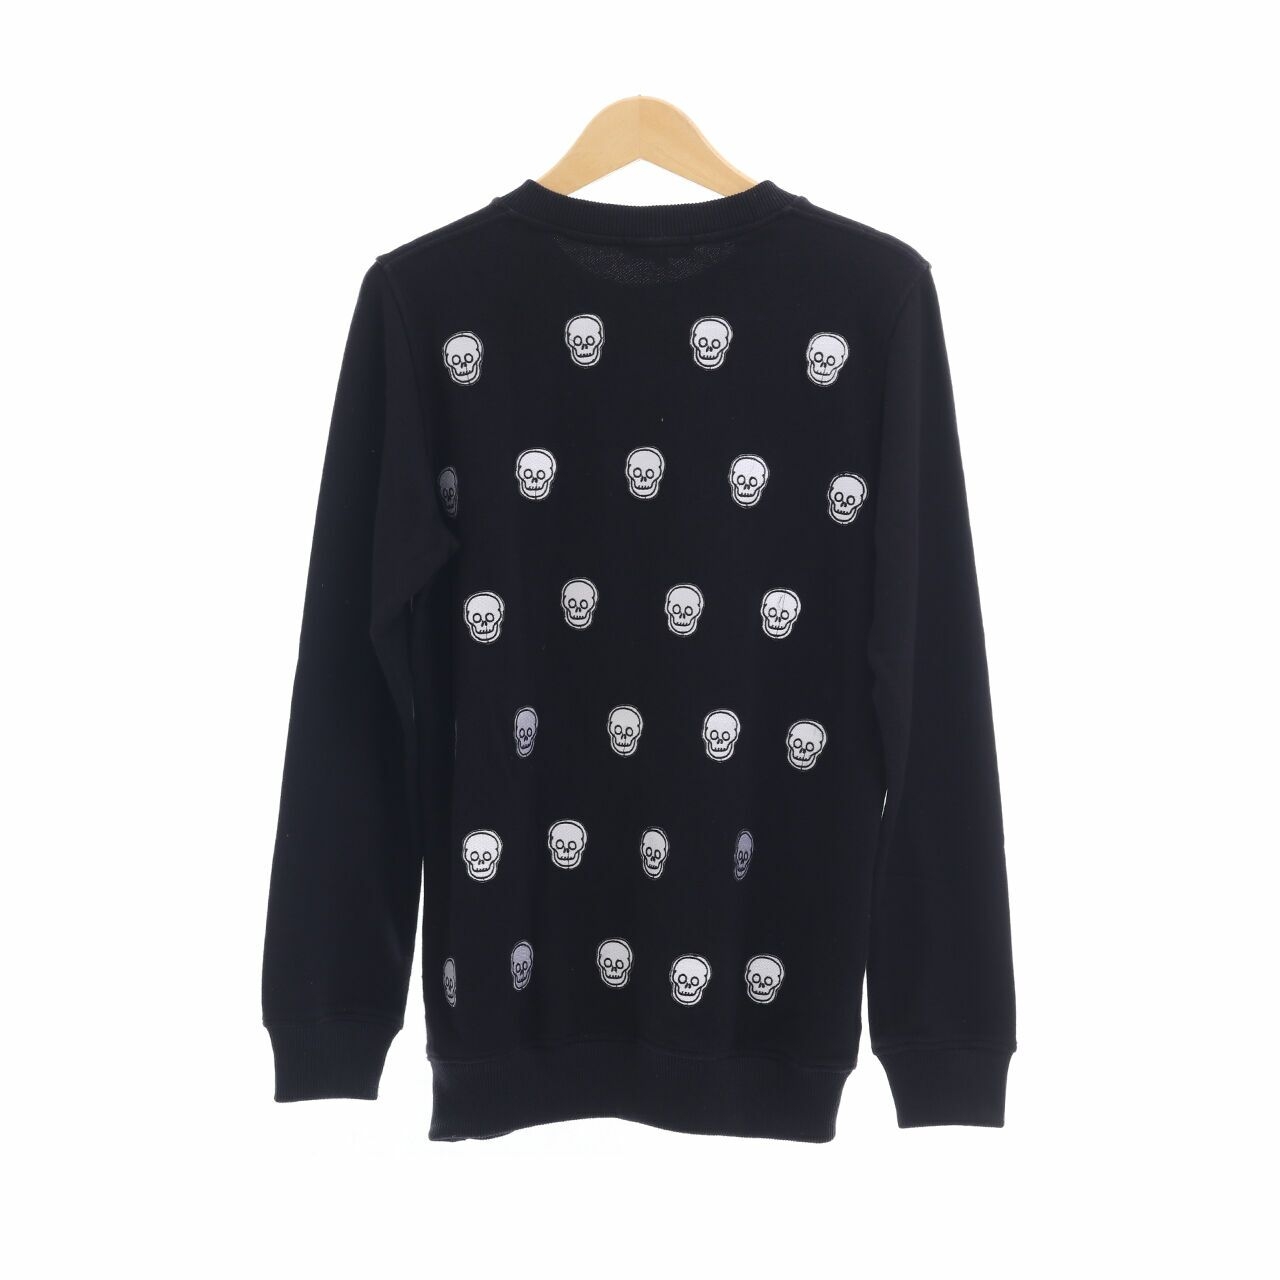 Monstore Black Sweater